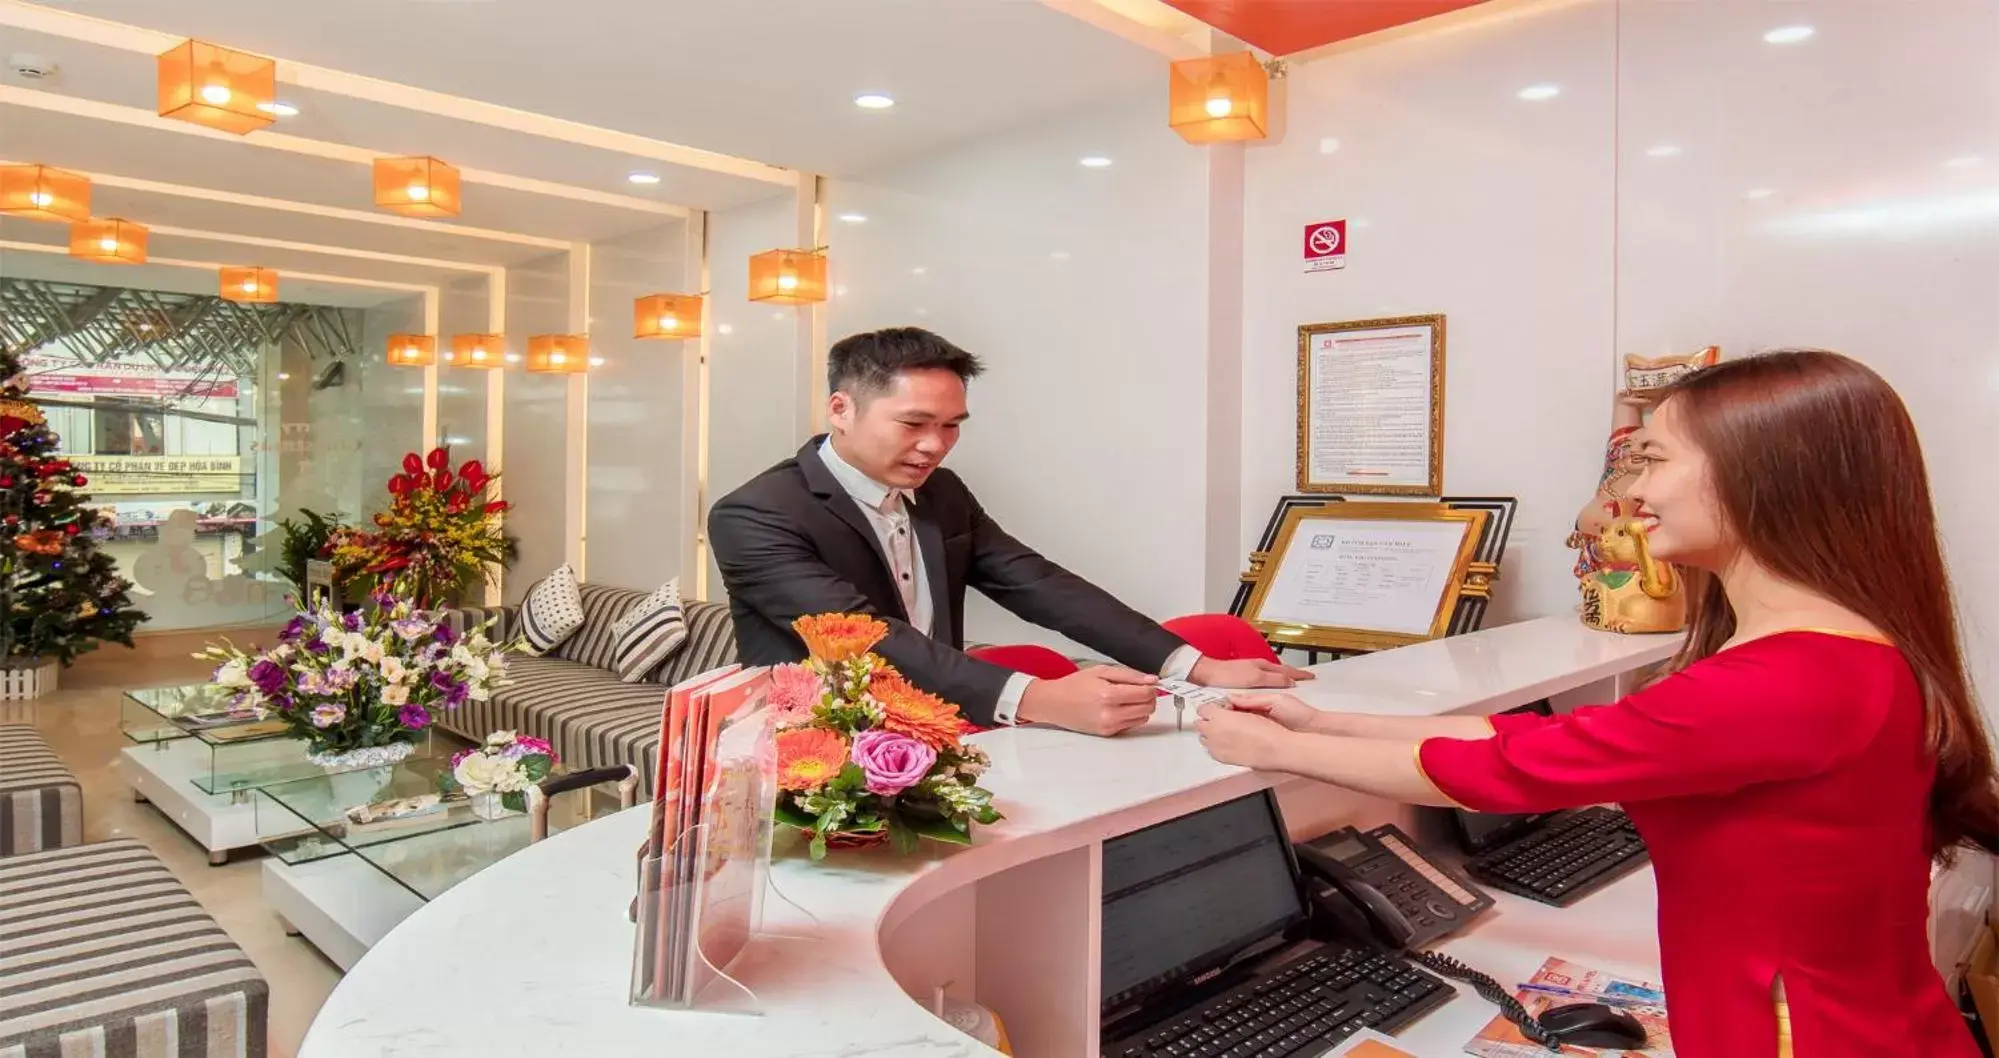 Lobby or reception in Van Mieu Hotel